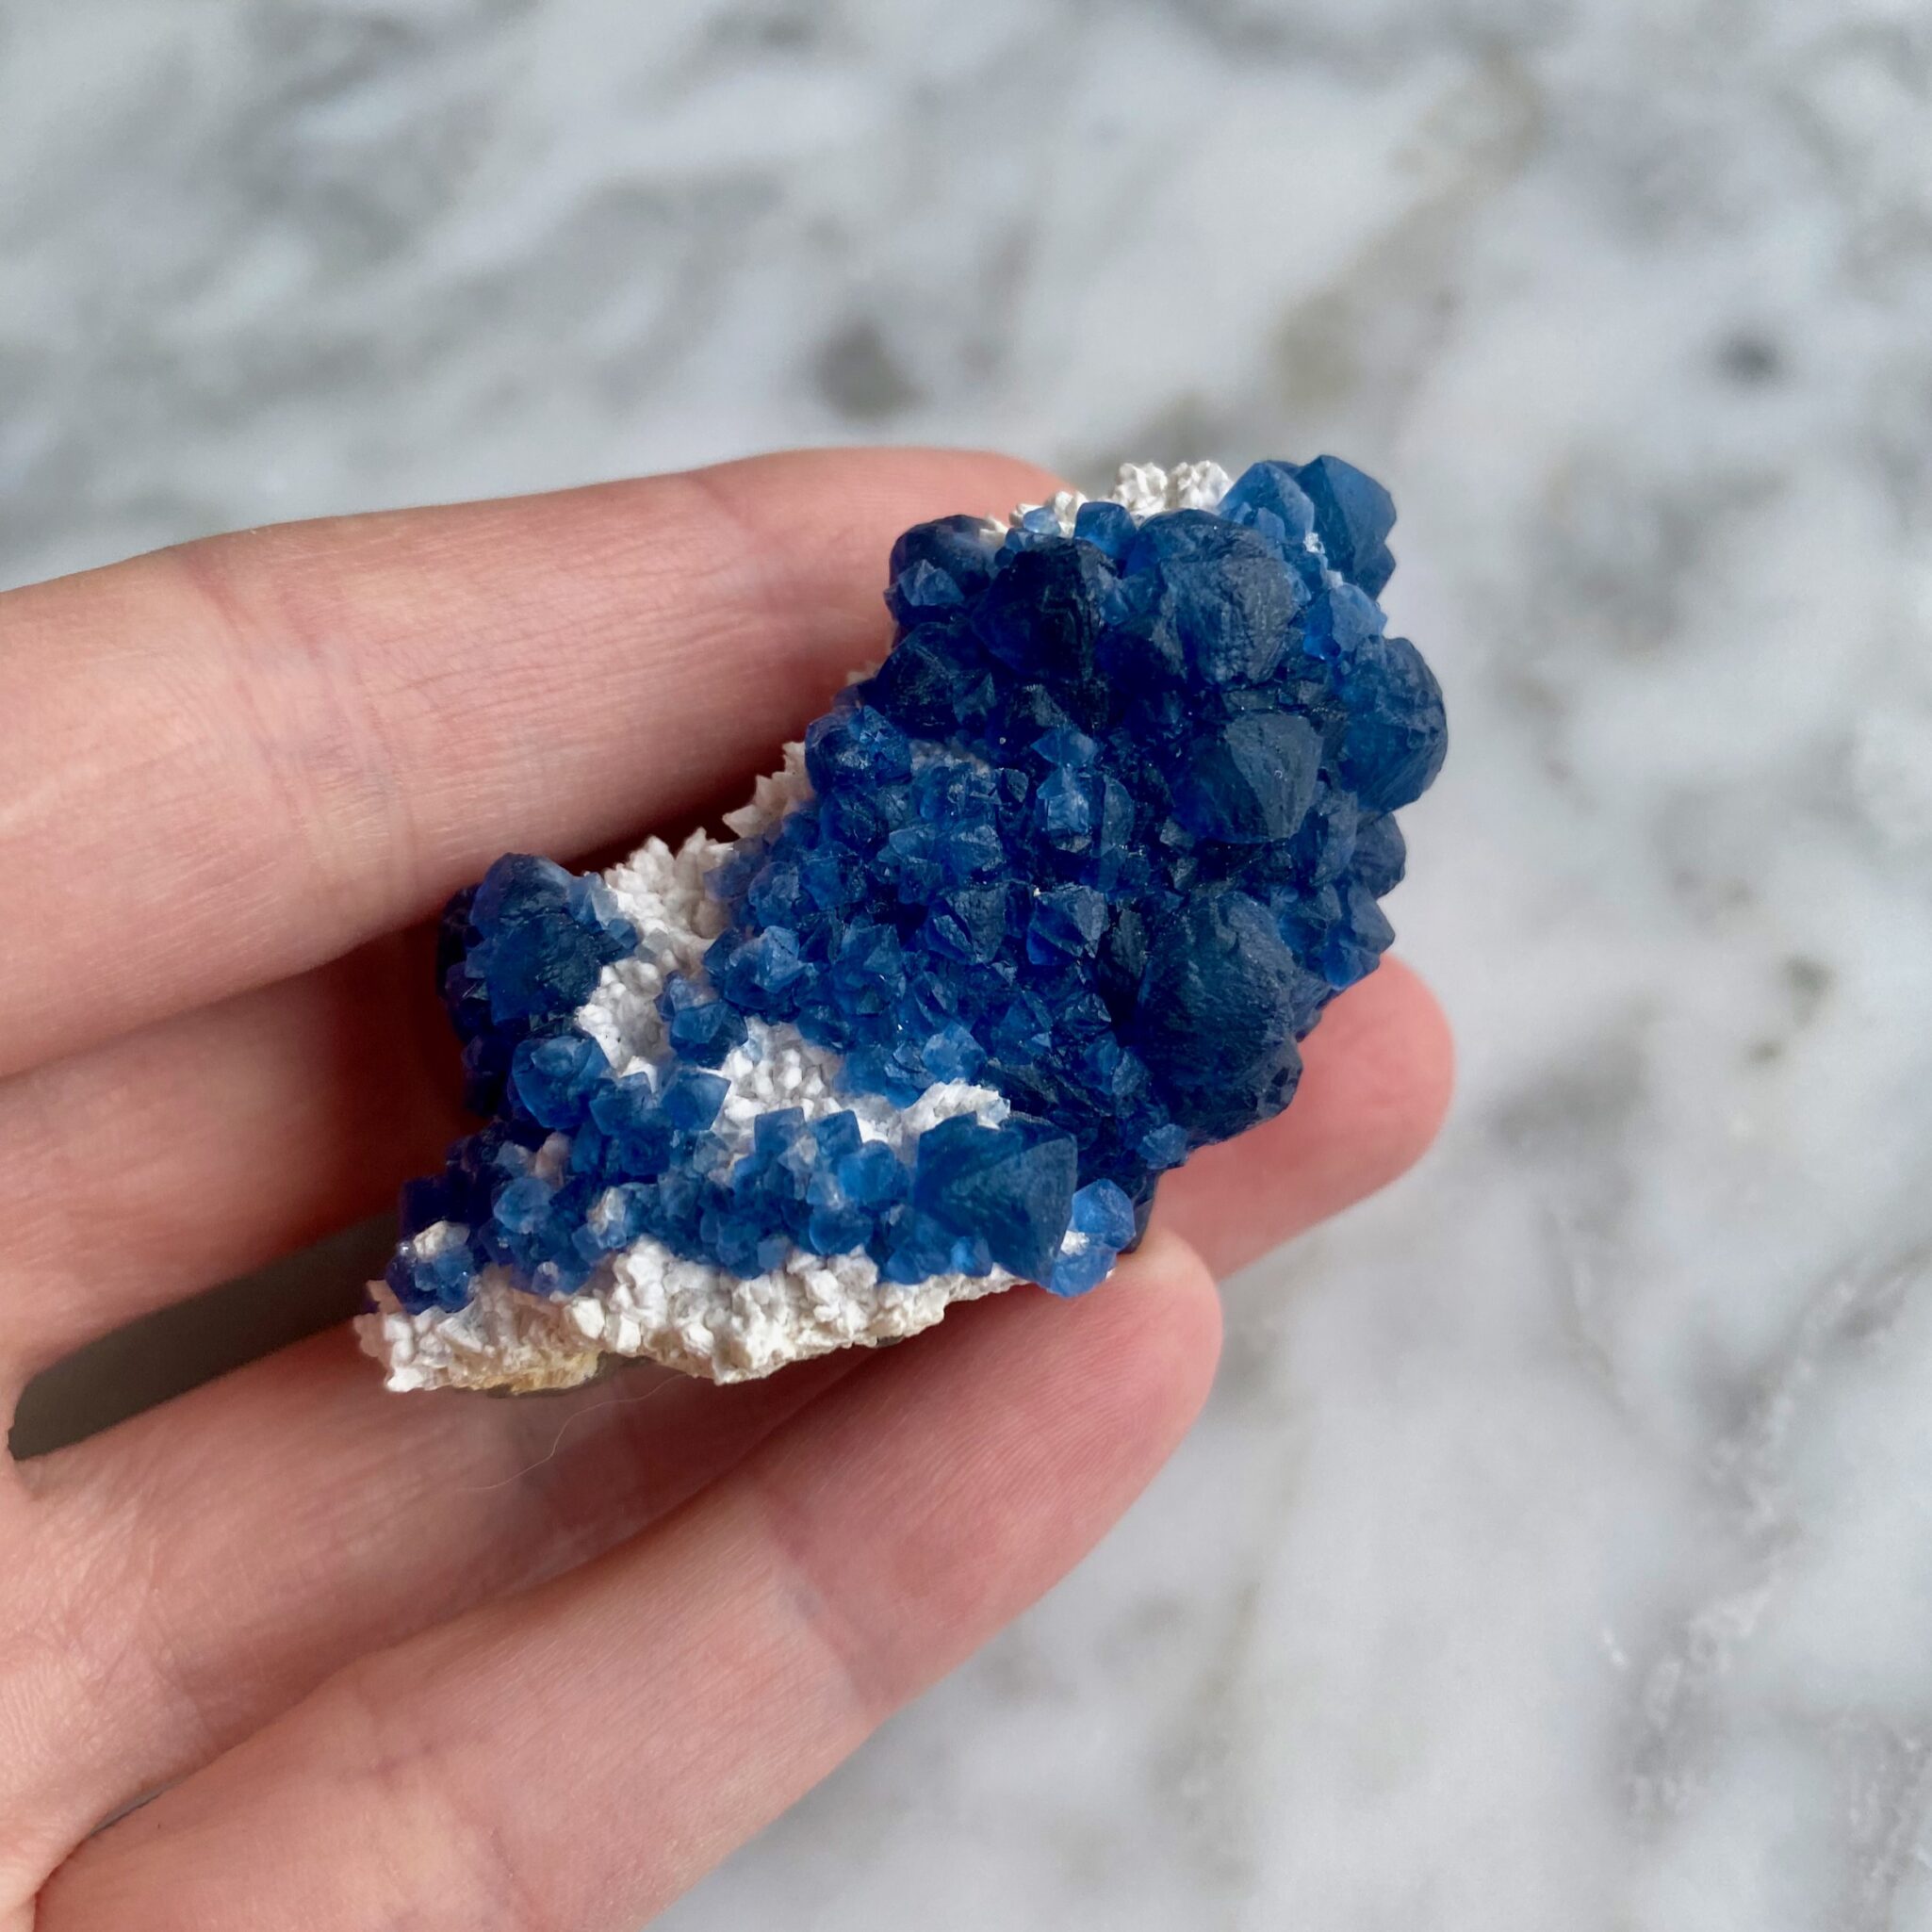 blueberry blue fluorite on quartz china - fluorite bleue bleuet